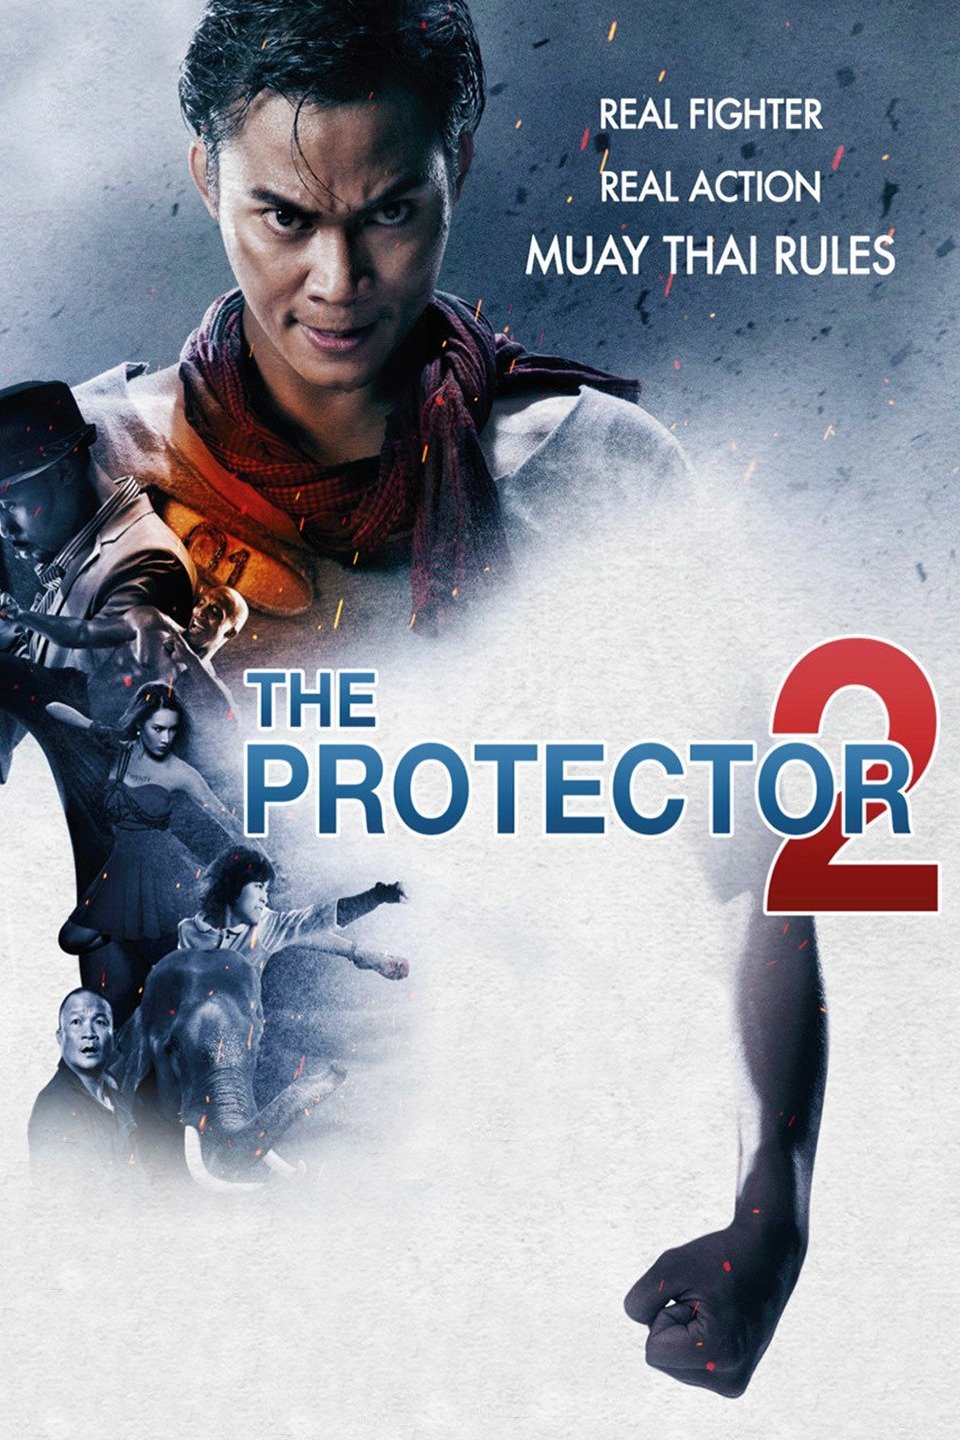 [MINI Super-HQ] The Protector 2 (2013) ต้มยำกุ้ง 2 [1080p] [พากย์ไทย 5.1] [บรรยายไทย + อังกฤษ ฝัง] [เสียงไทย + ซับไทย] [ONE2UP]